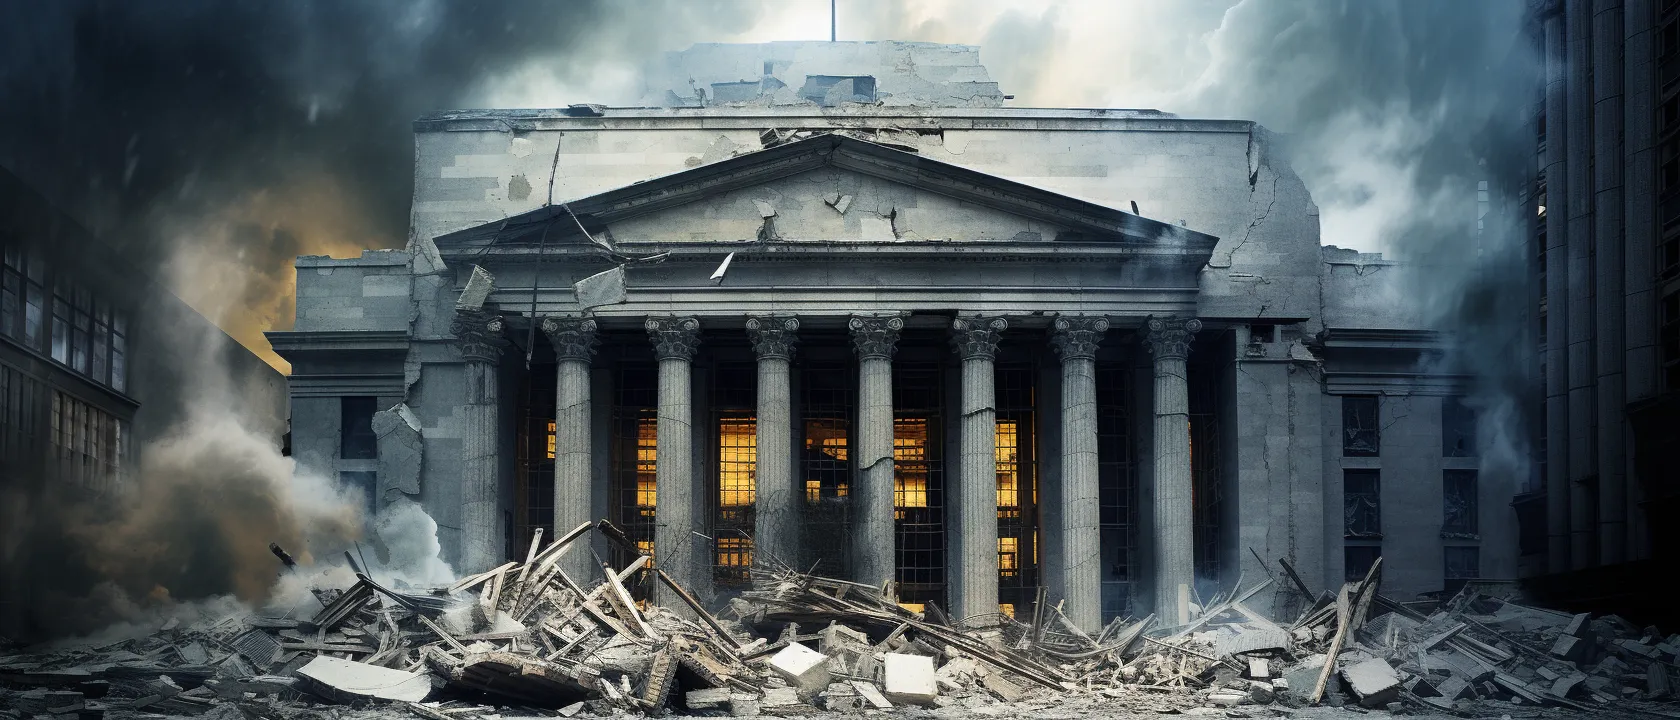 Unprecedented Federal Reserve Losses Signal Economic Turbulence Ahead